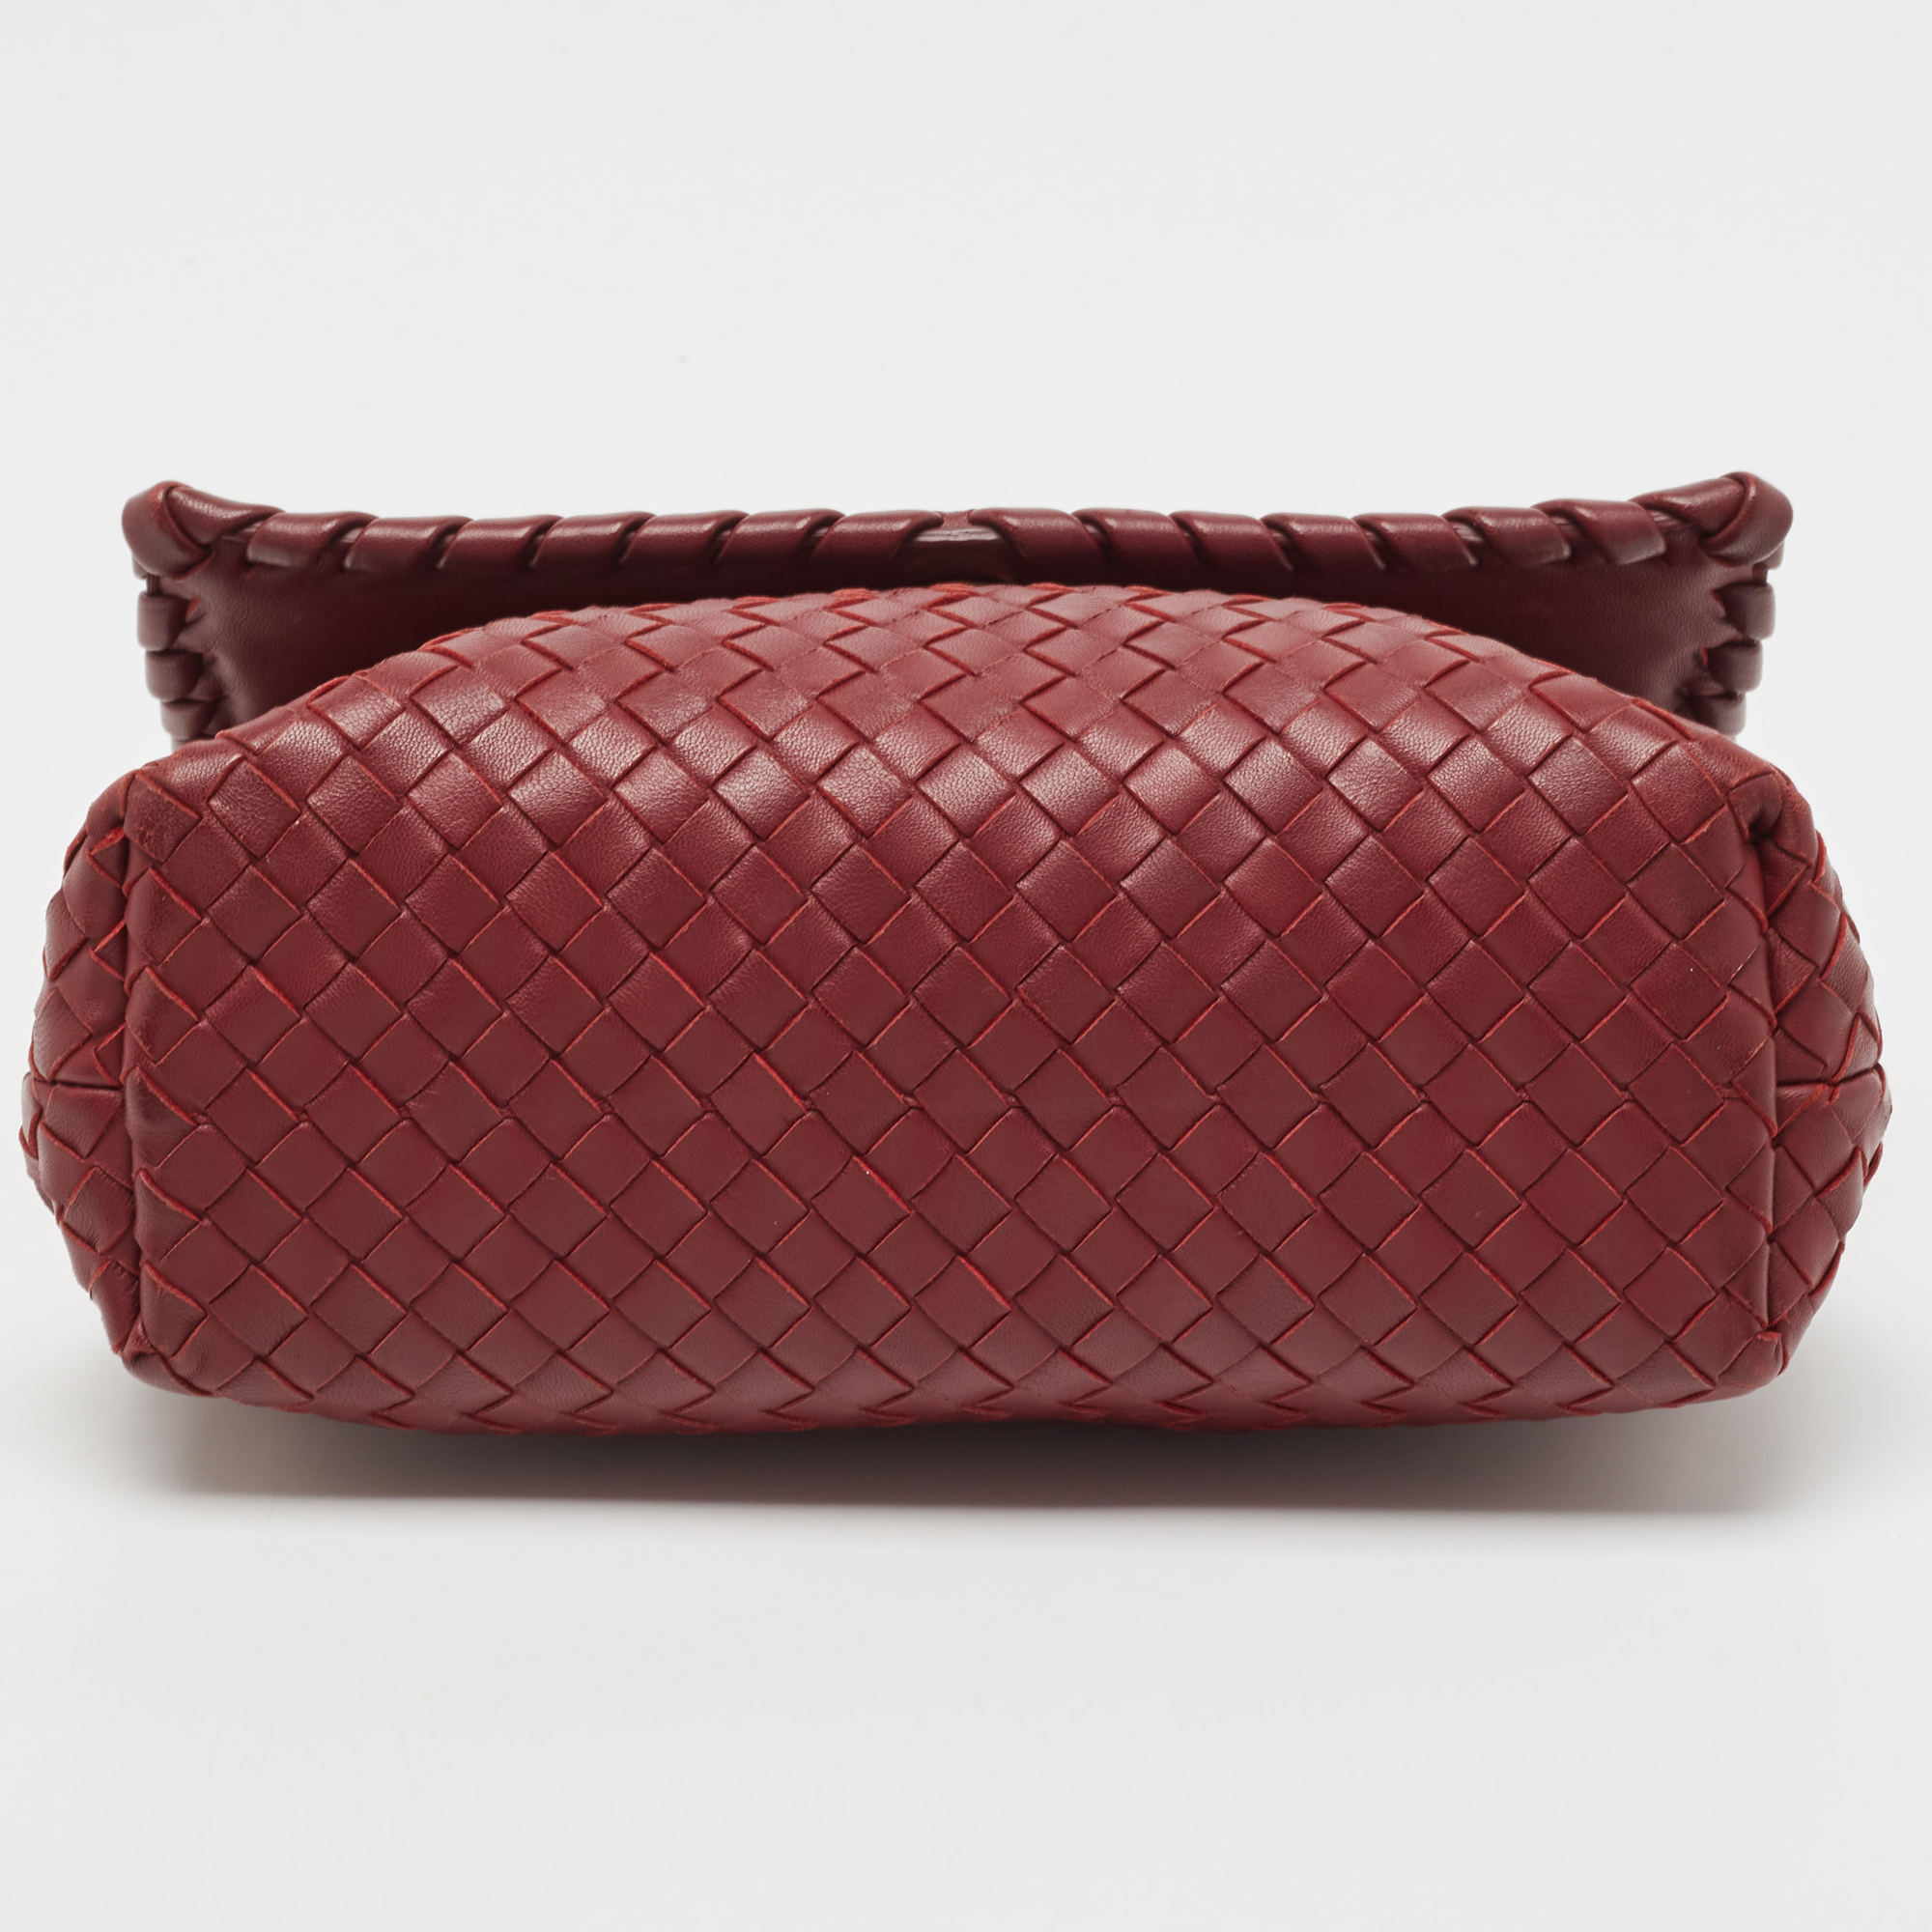 Bottega Veneta Red Intrecciato Leather Small Olimpia Shoulder Bag